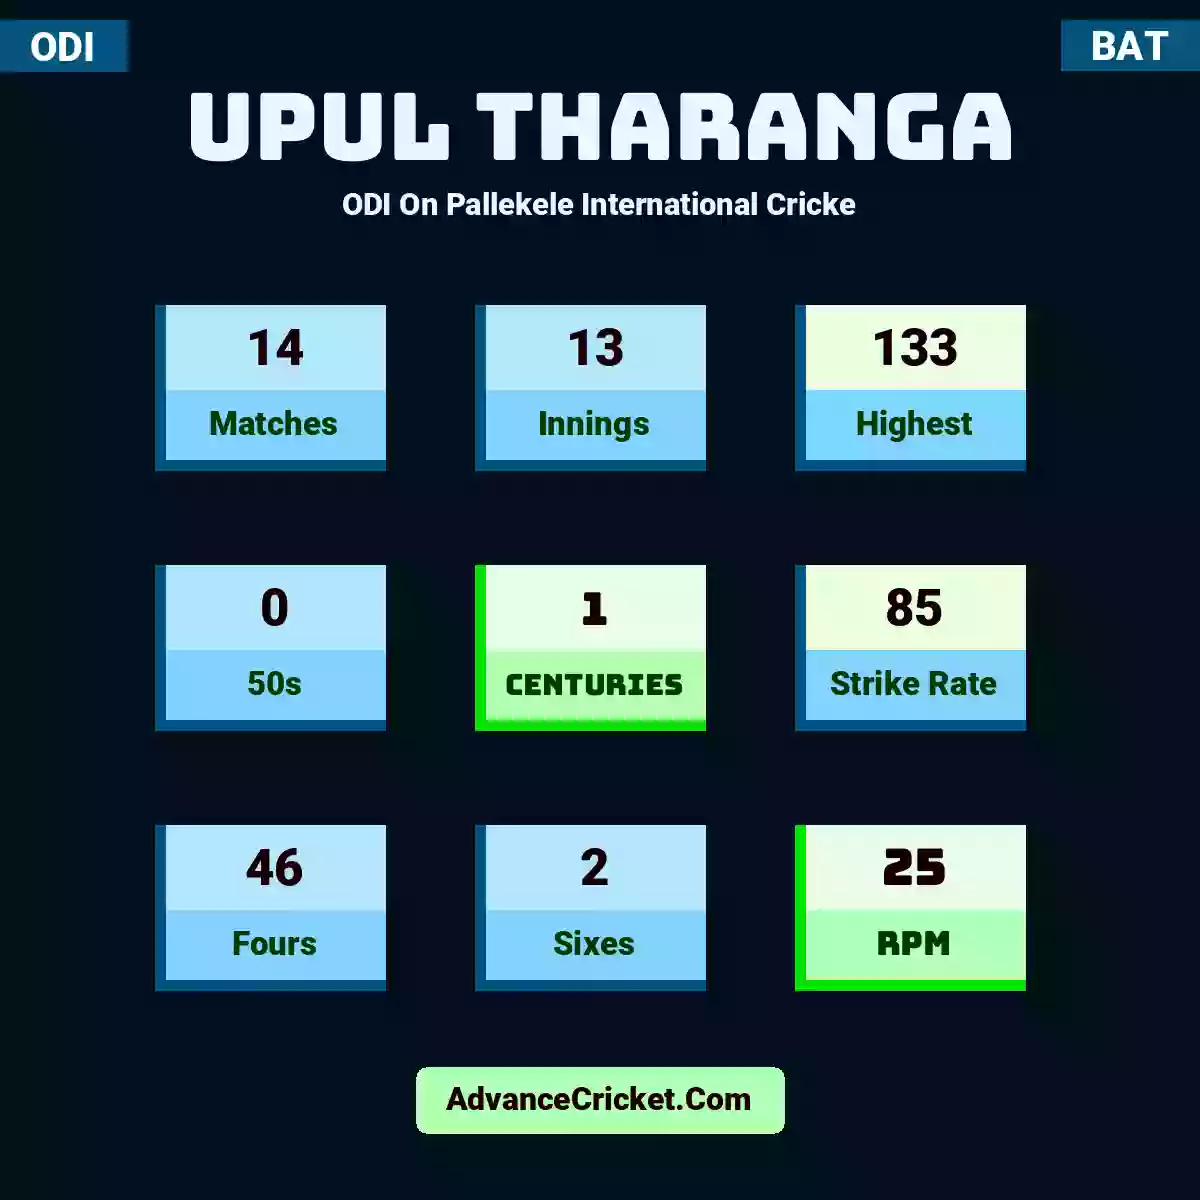 Upul Tharanga ODI  On Pallekele International Cricke, Upul Tharanga played 14 matches, scored 133 runs as highest, 0 half-centuries, and 1 centuries, with a strike rate of 85. U.Tharanga hit 46 fours and 2 sixes, with an RPM of 25.